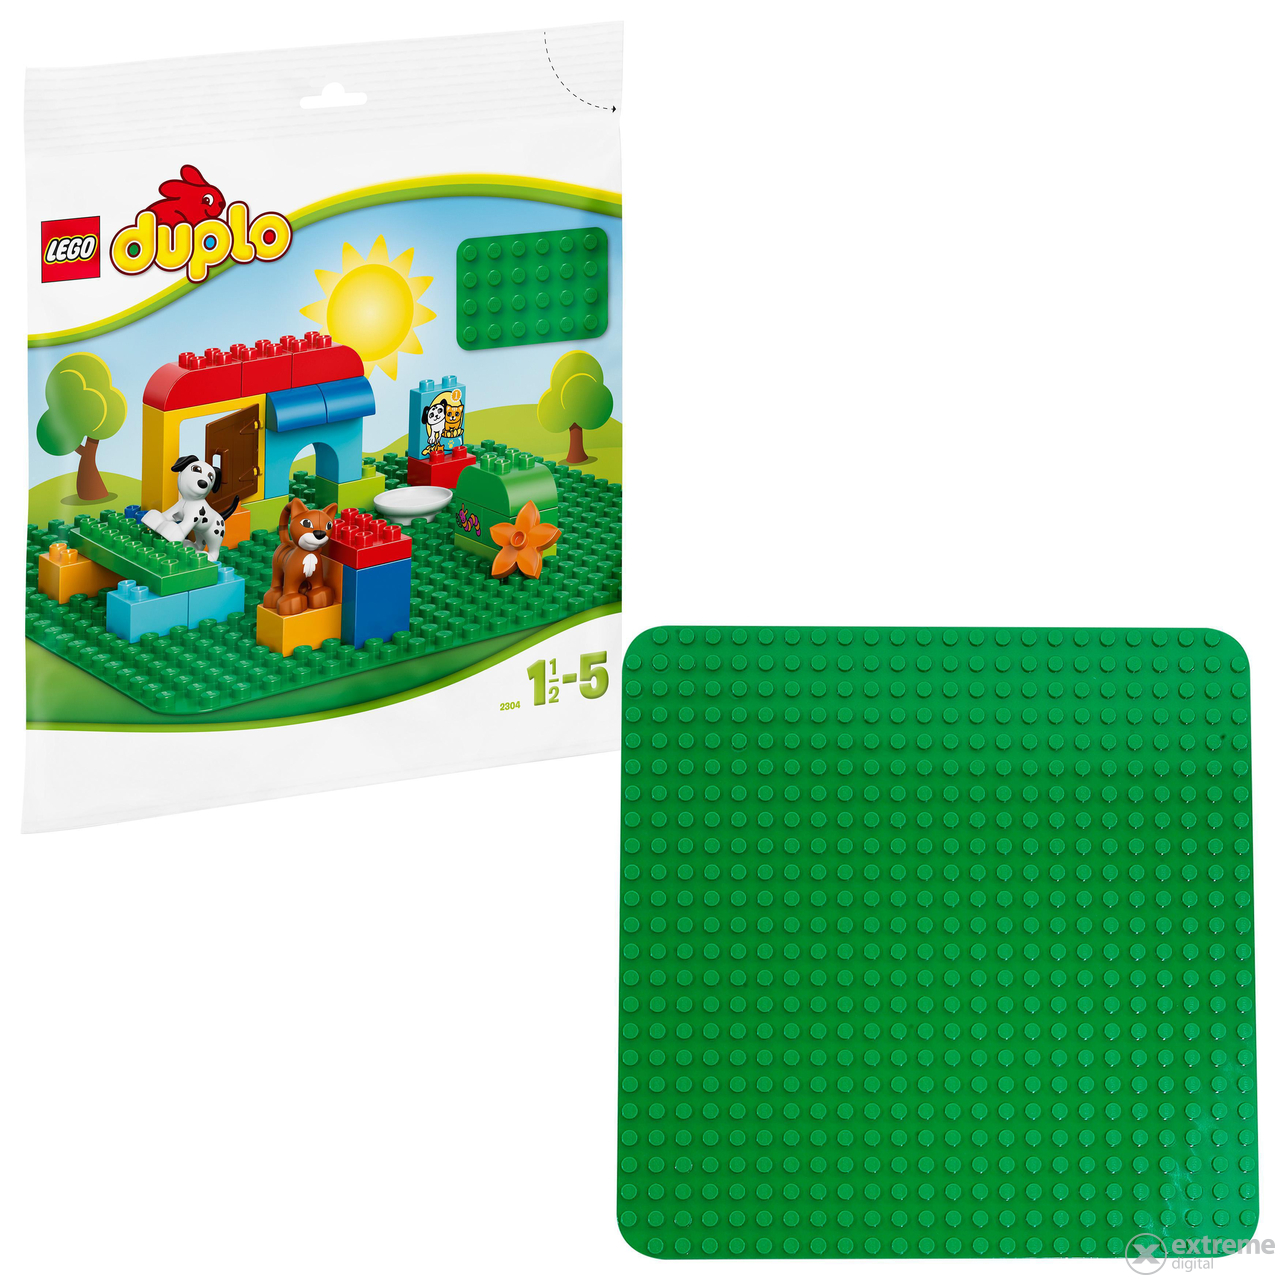 LEGO Duplo  Zelena podloga za gradnju (2304)